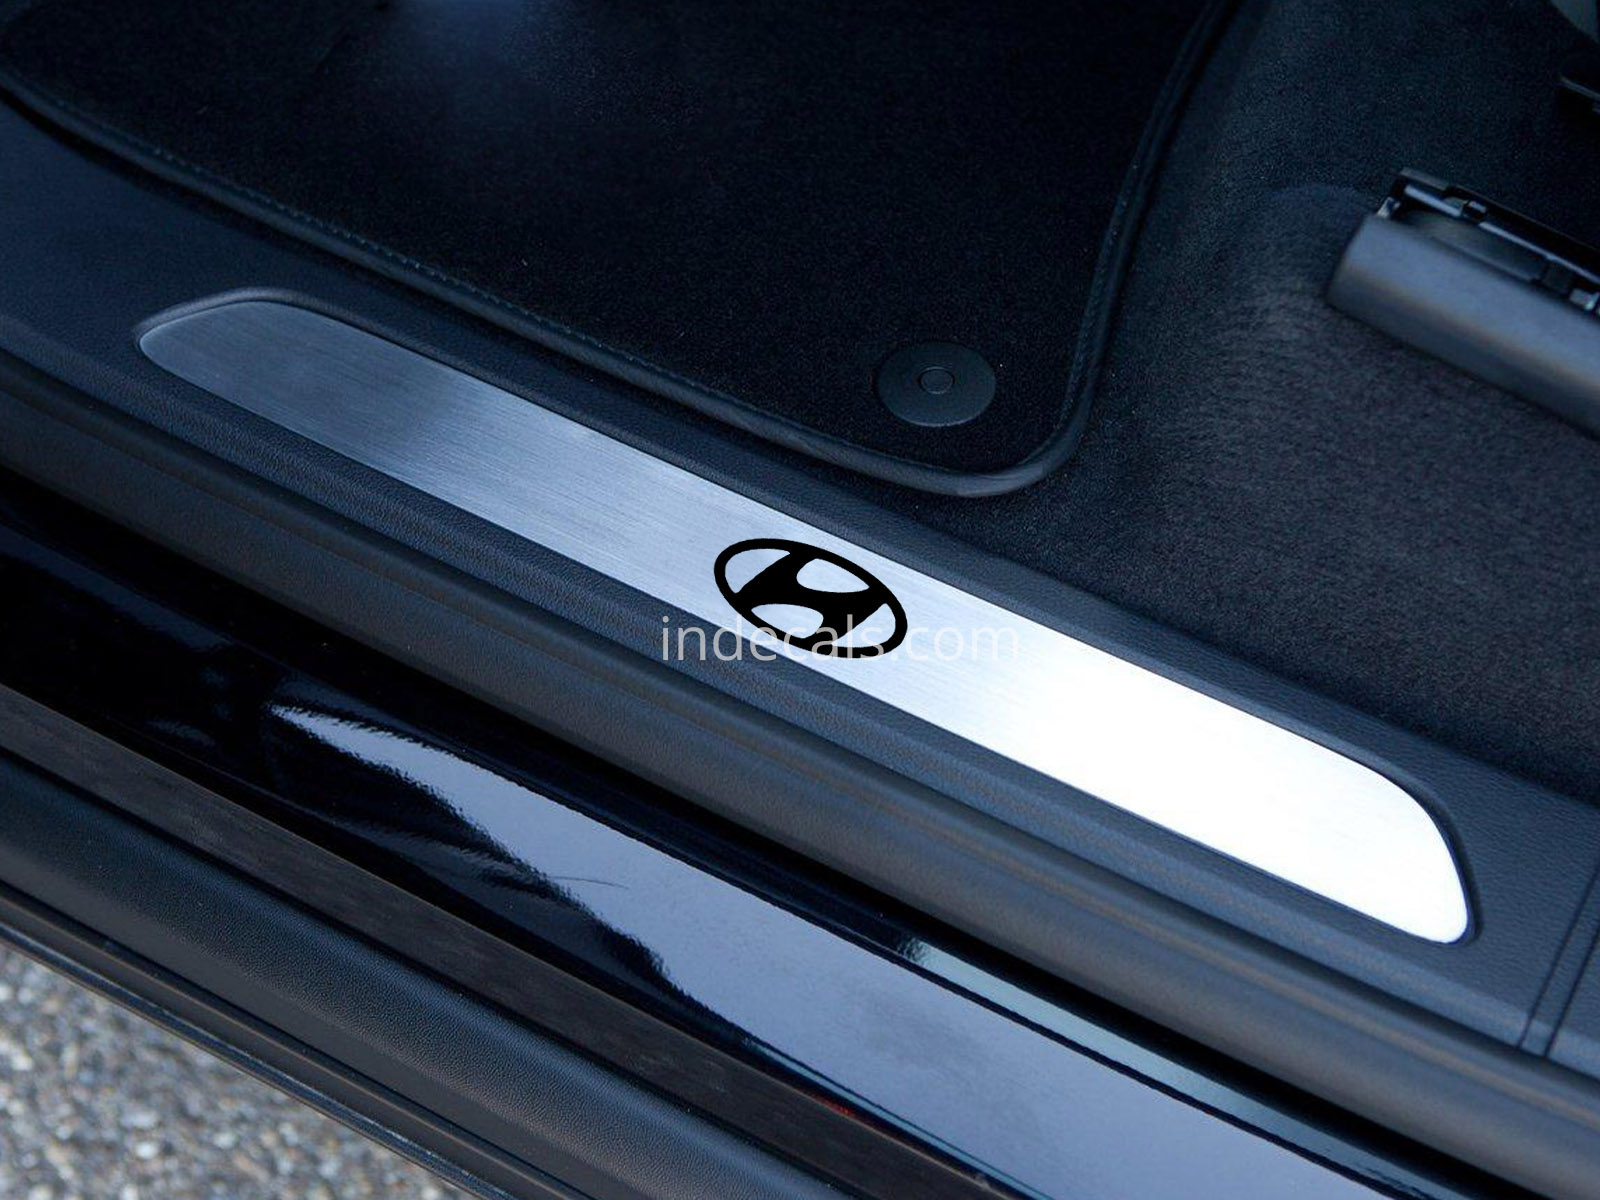 6 x Hyundai Stickers for Door Sills - Black